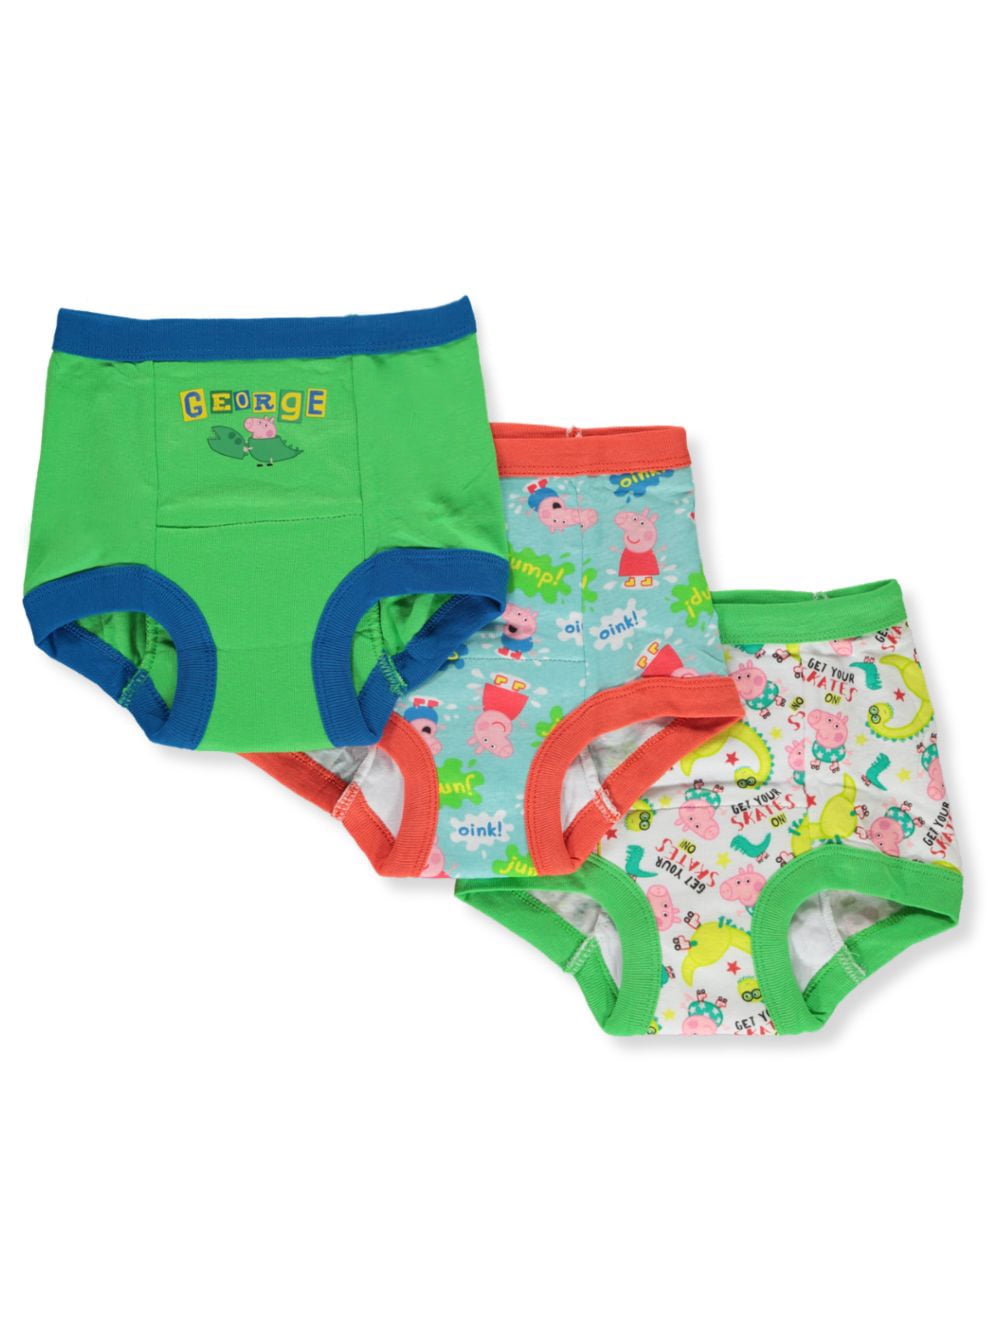 32 PC Toddler Boys Underwear Briefs Socks A-Shirts T-Shirts Lot Bundle 2T 3T 4T 